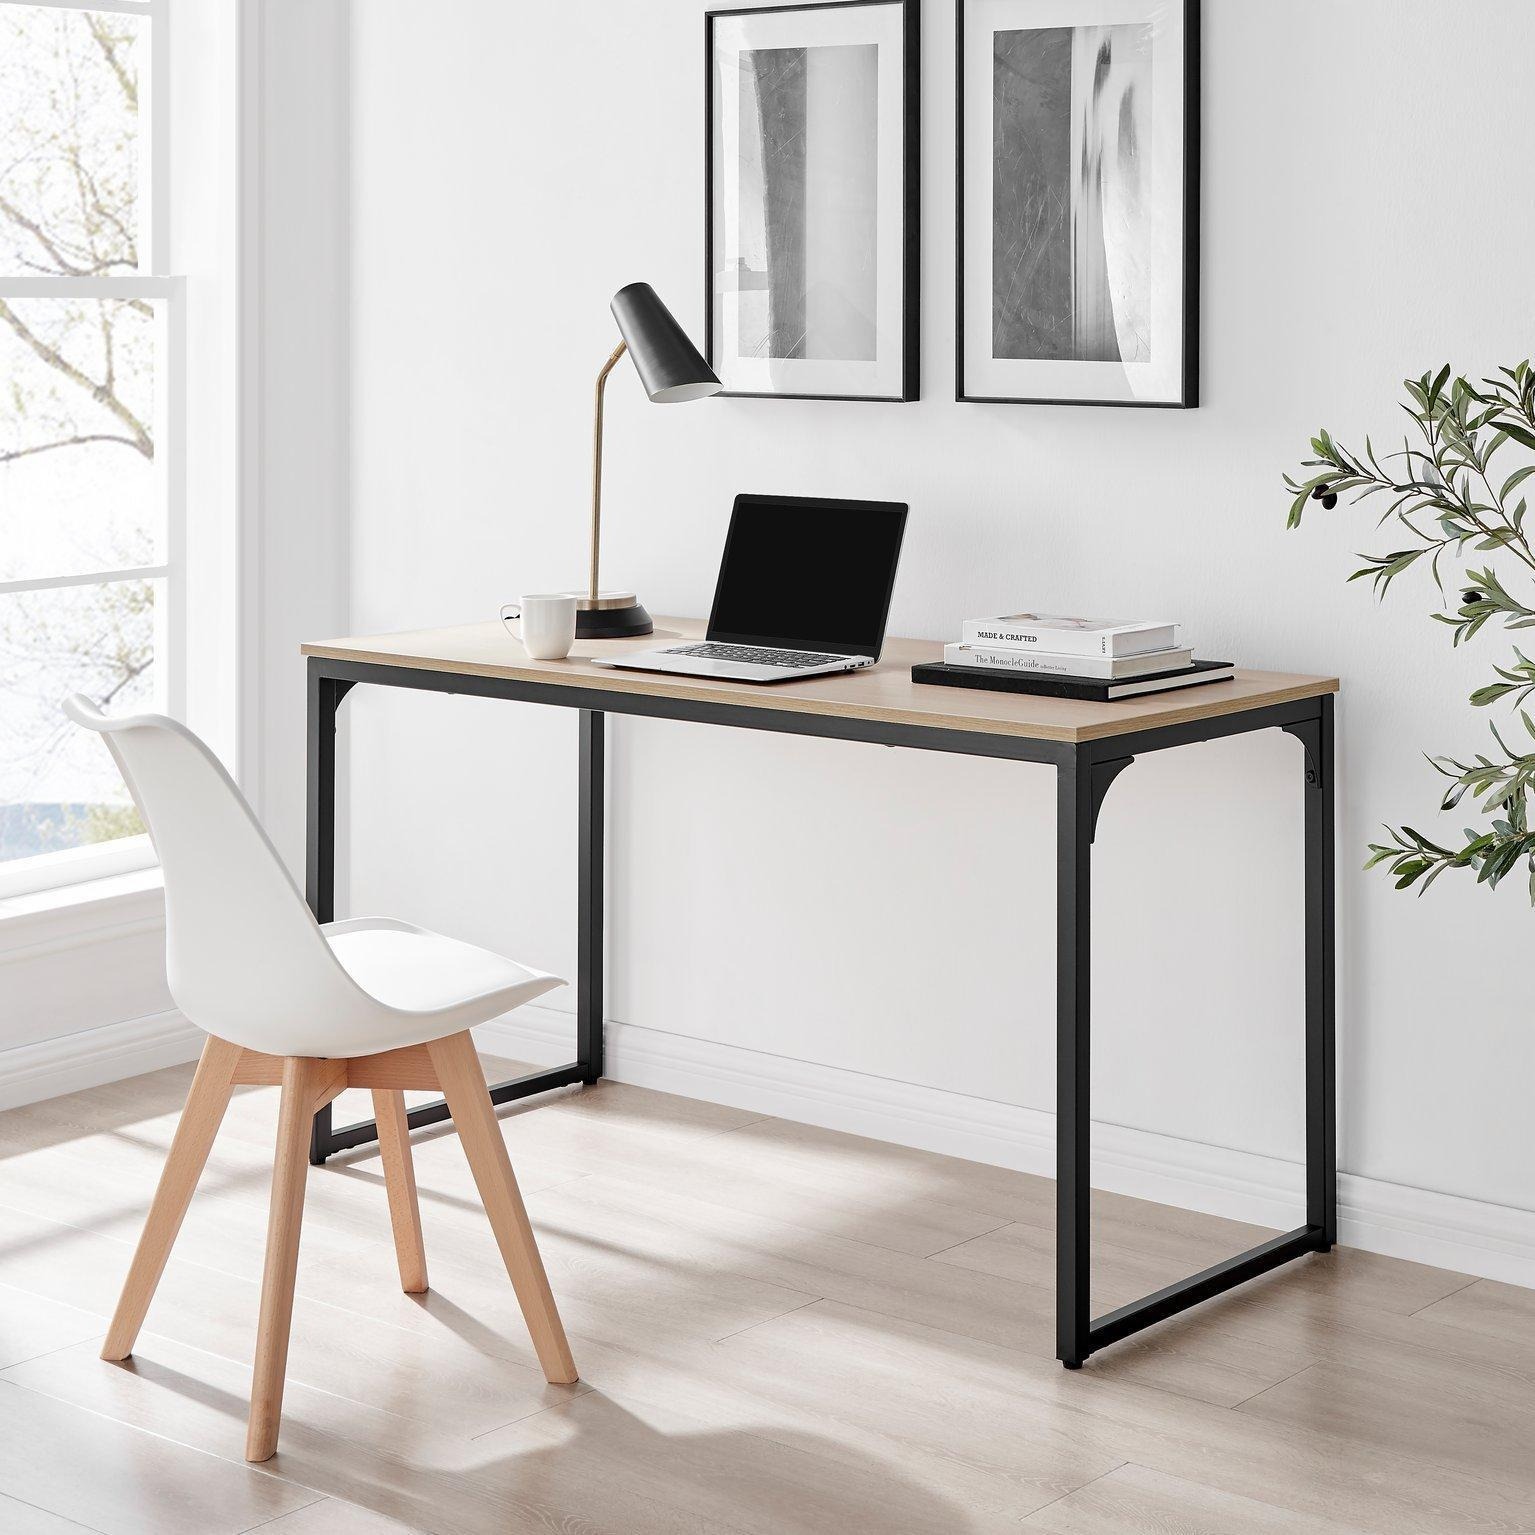 Kendrick 140cm Melamine Coated Home Office Computer Desk with Black Legs - image 1